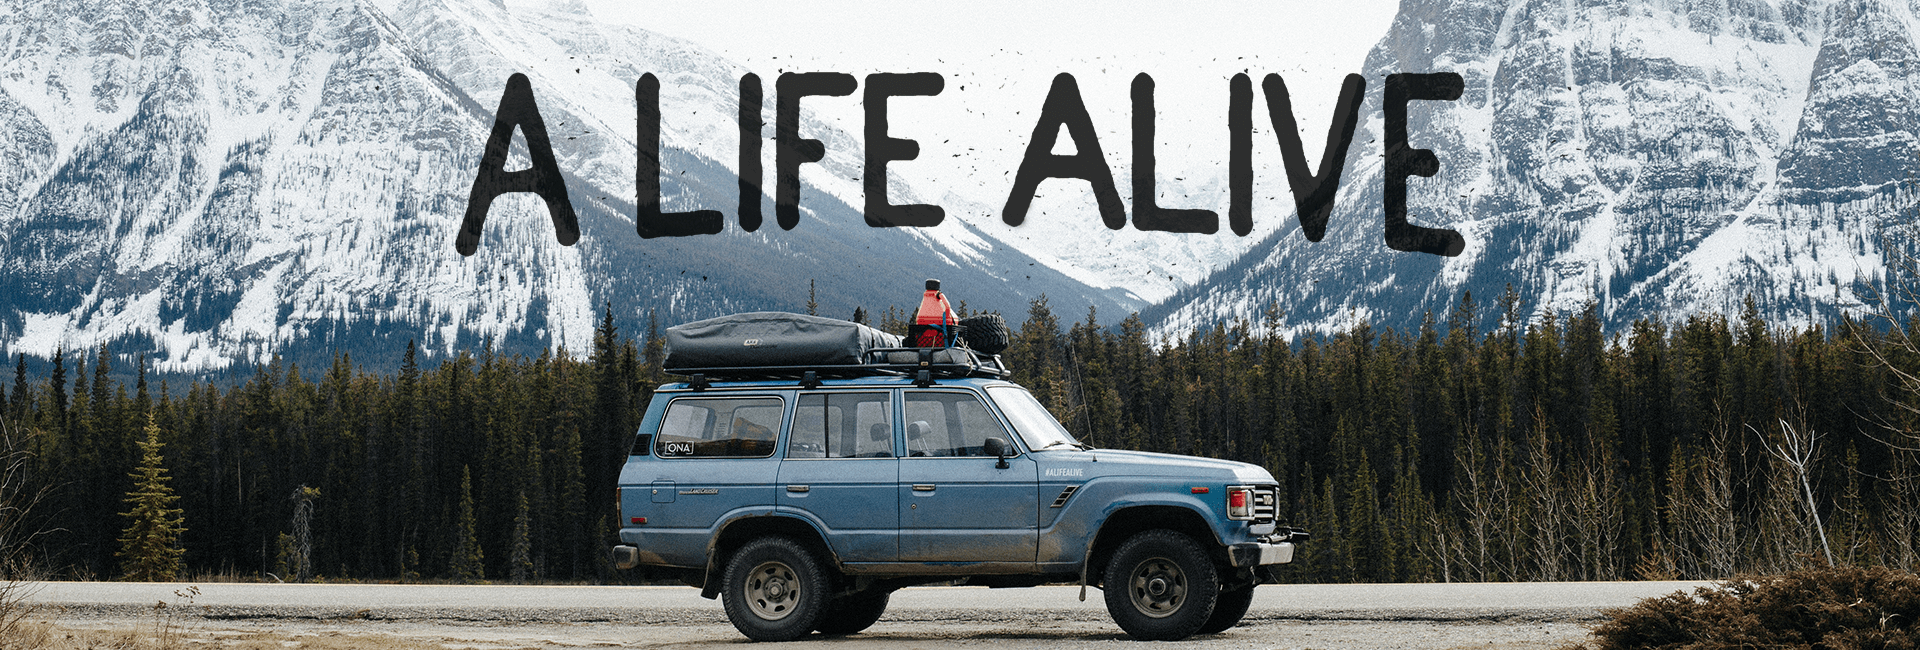 A Life Alive Campsite Title